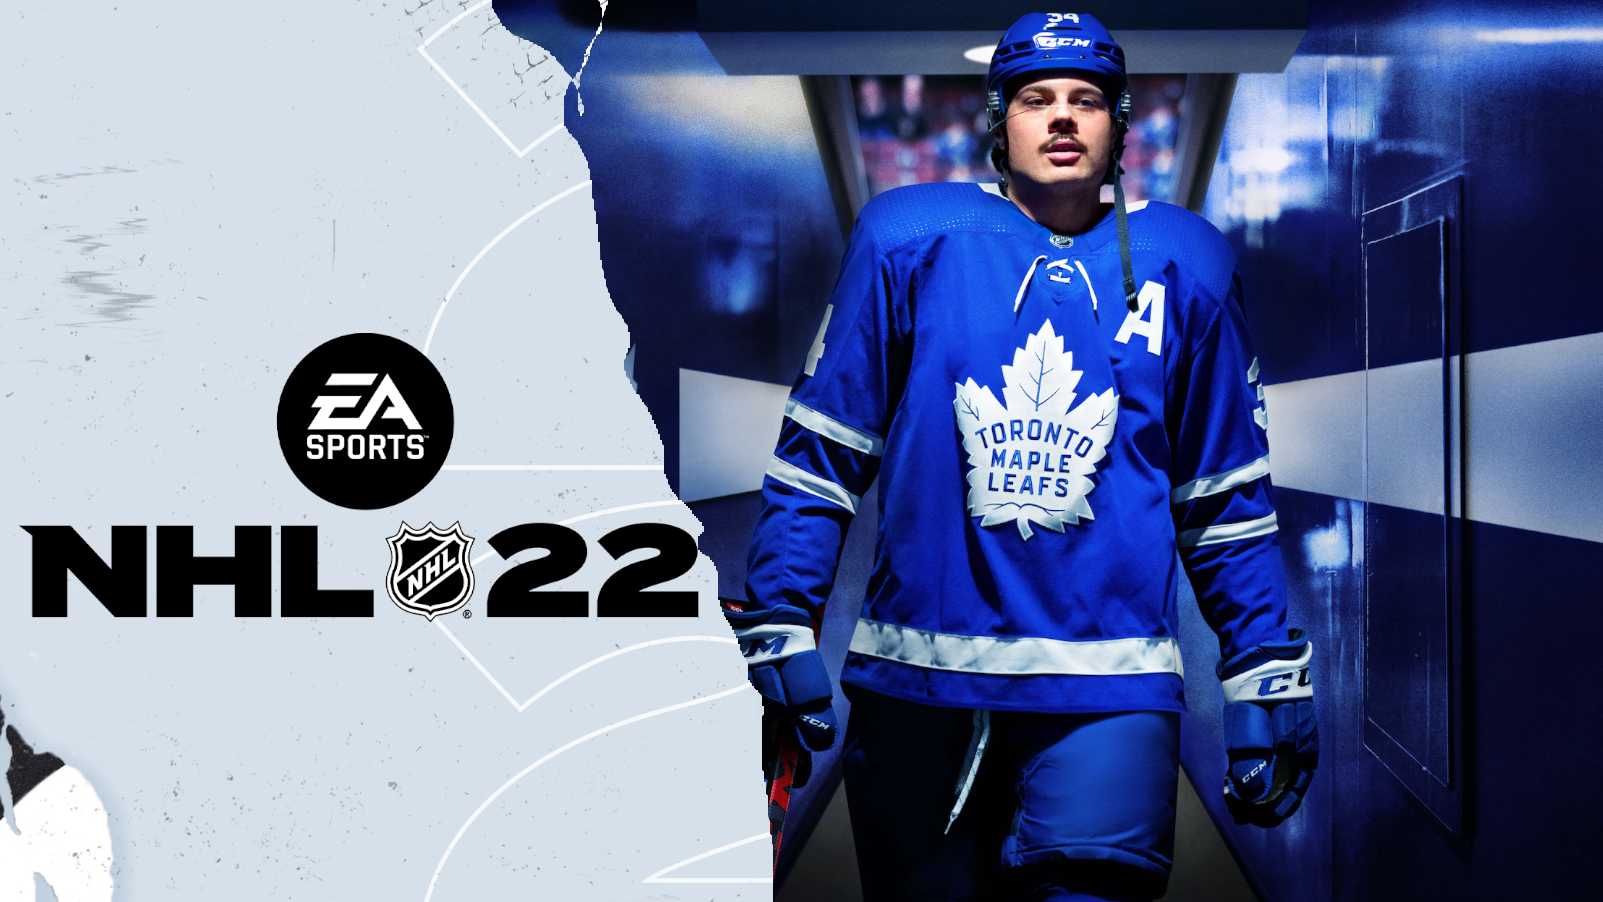 НХЛ 22 EA Sports. НХЛ на Нинтендо свитч. NHL 22 Nintendo Switch. Виртуальный хоккей. Nintendo switch nhl